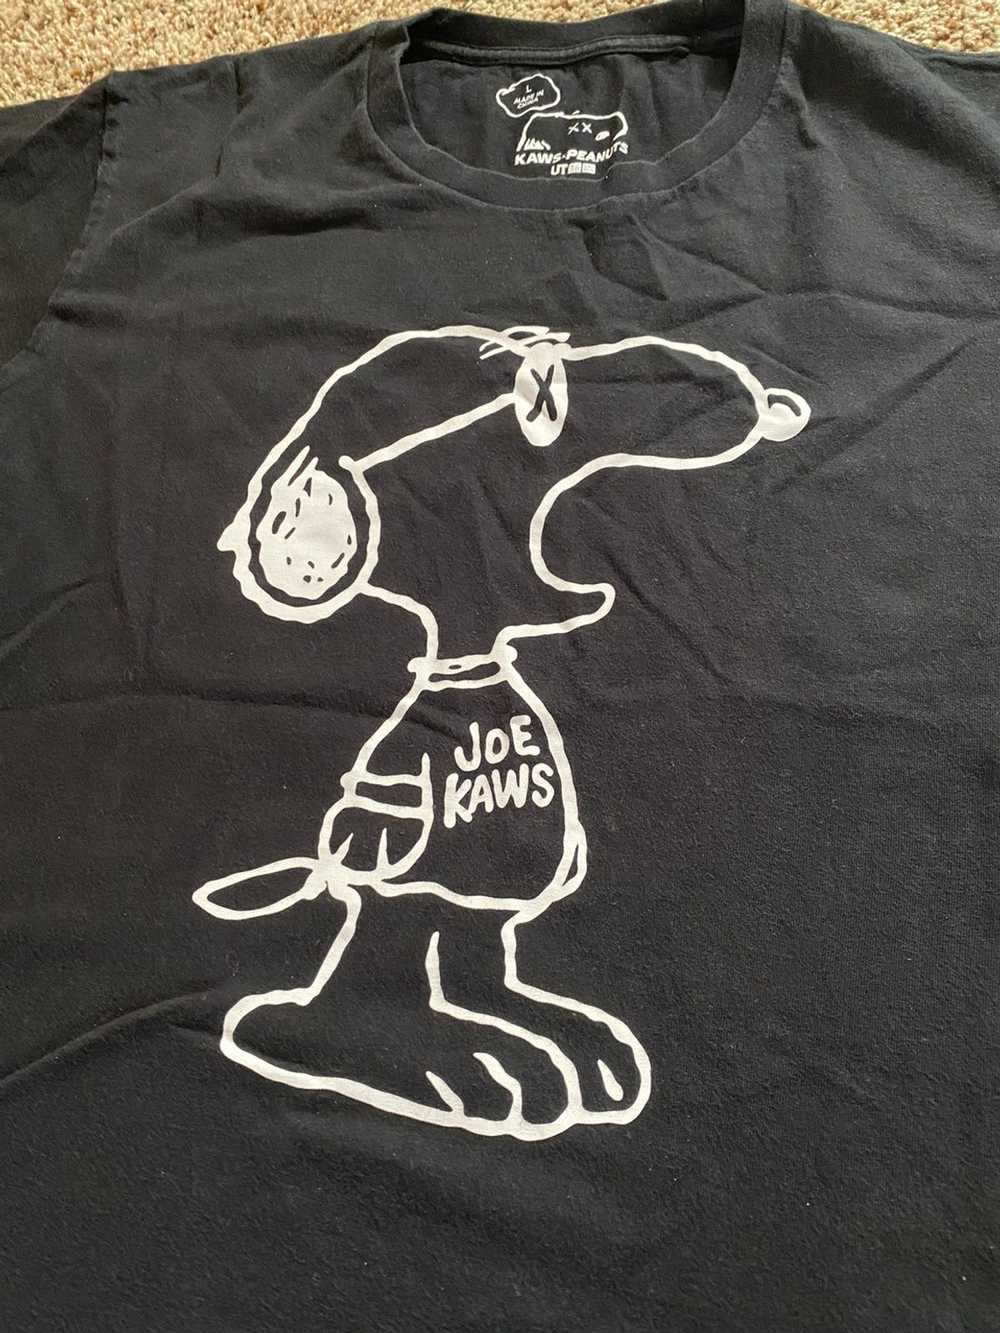 Uniqlo Kaws X Peanuts X Uniqlo Snoopy T-Shirt - image 2